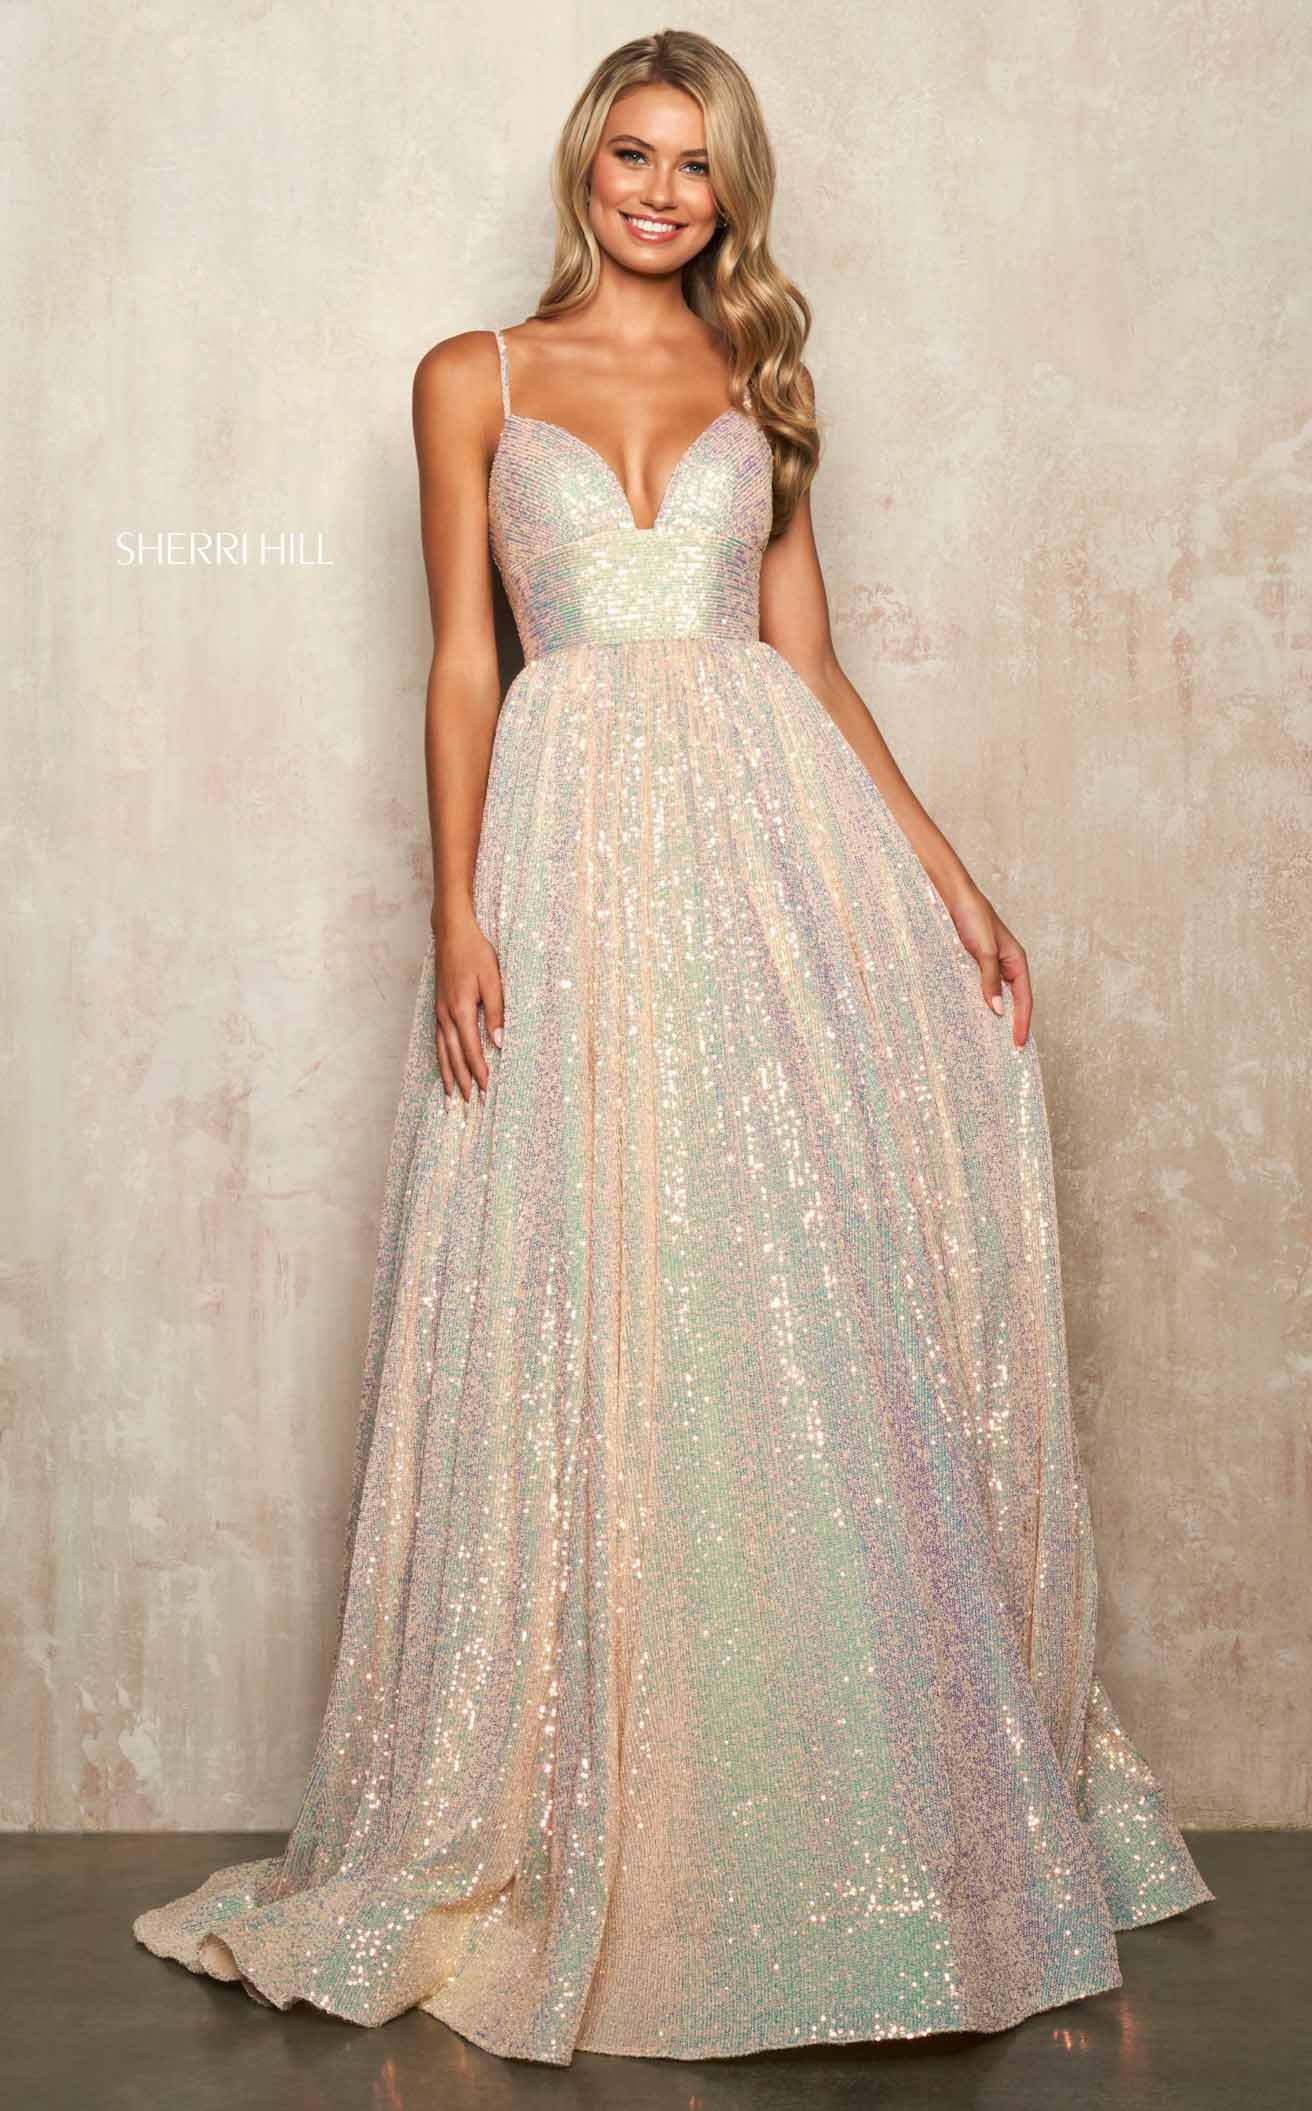 Sherri Hill Dresses | Shop Trendy Prom ...